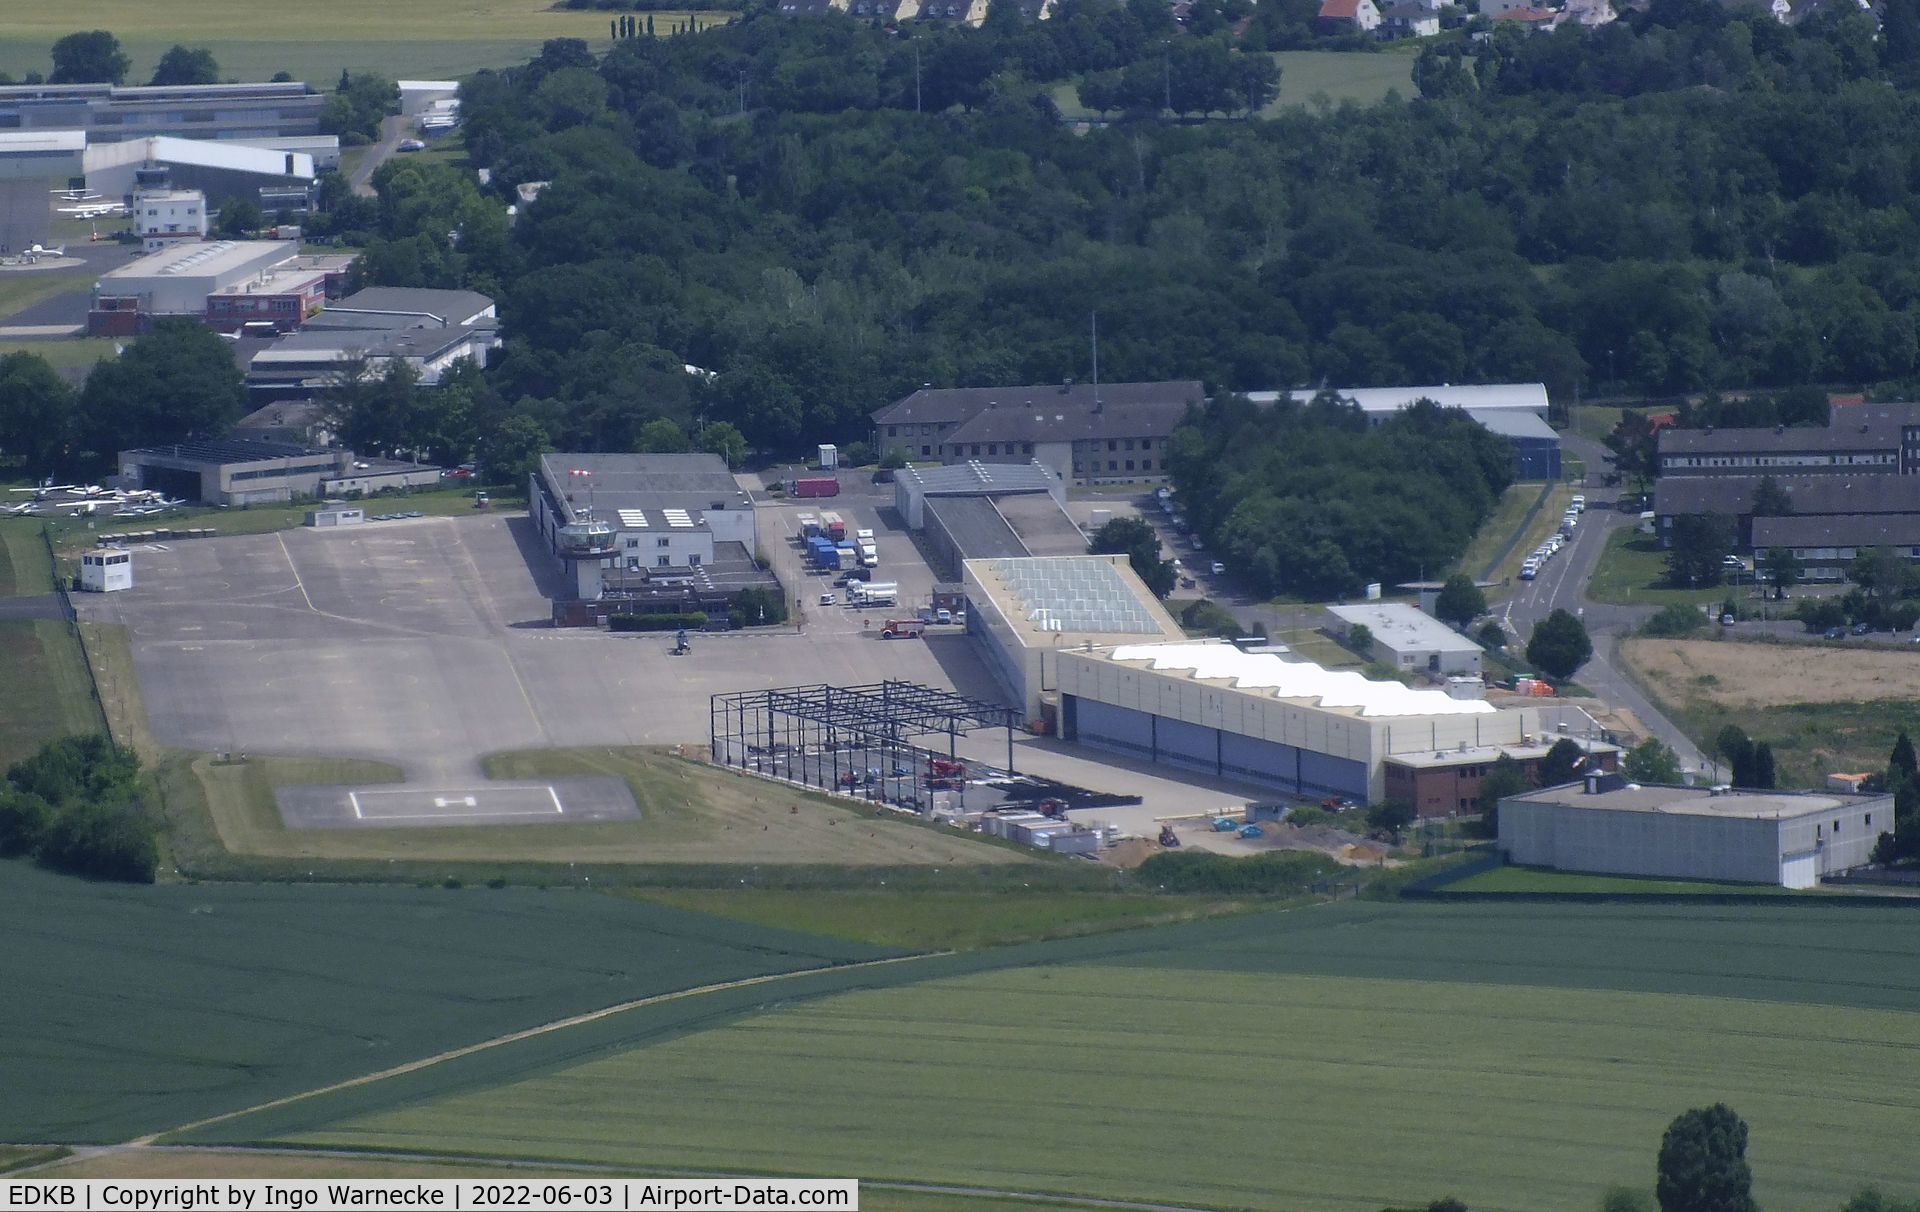 Bonn-Hangelar Airport, Sankt Augustin Germany (EDKB) - aerial view of Bundespolizei (federal police) towers and hangars at the western end of Bonn-Hangelar airfield